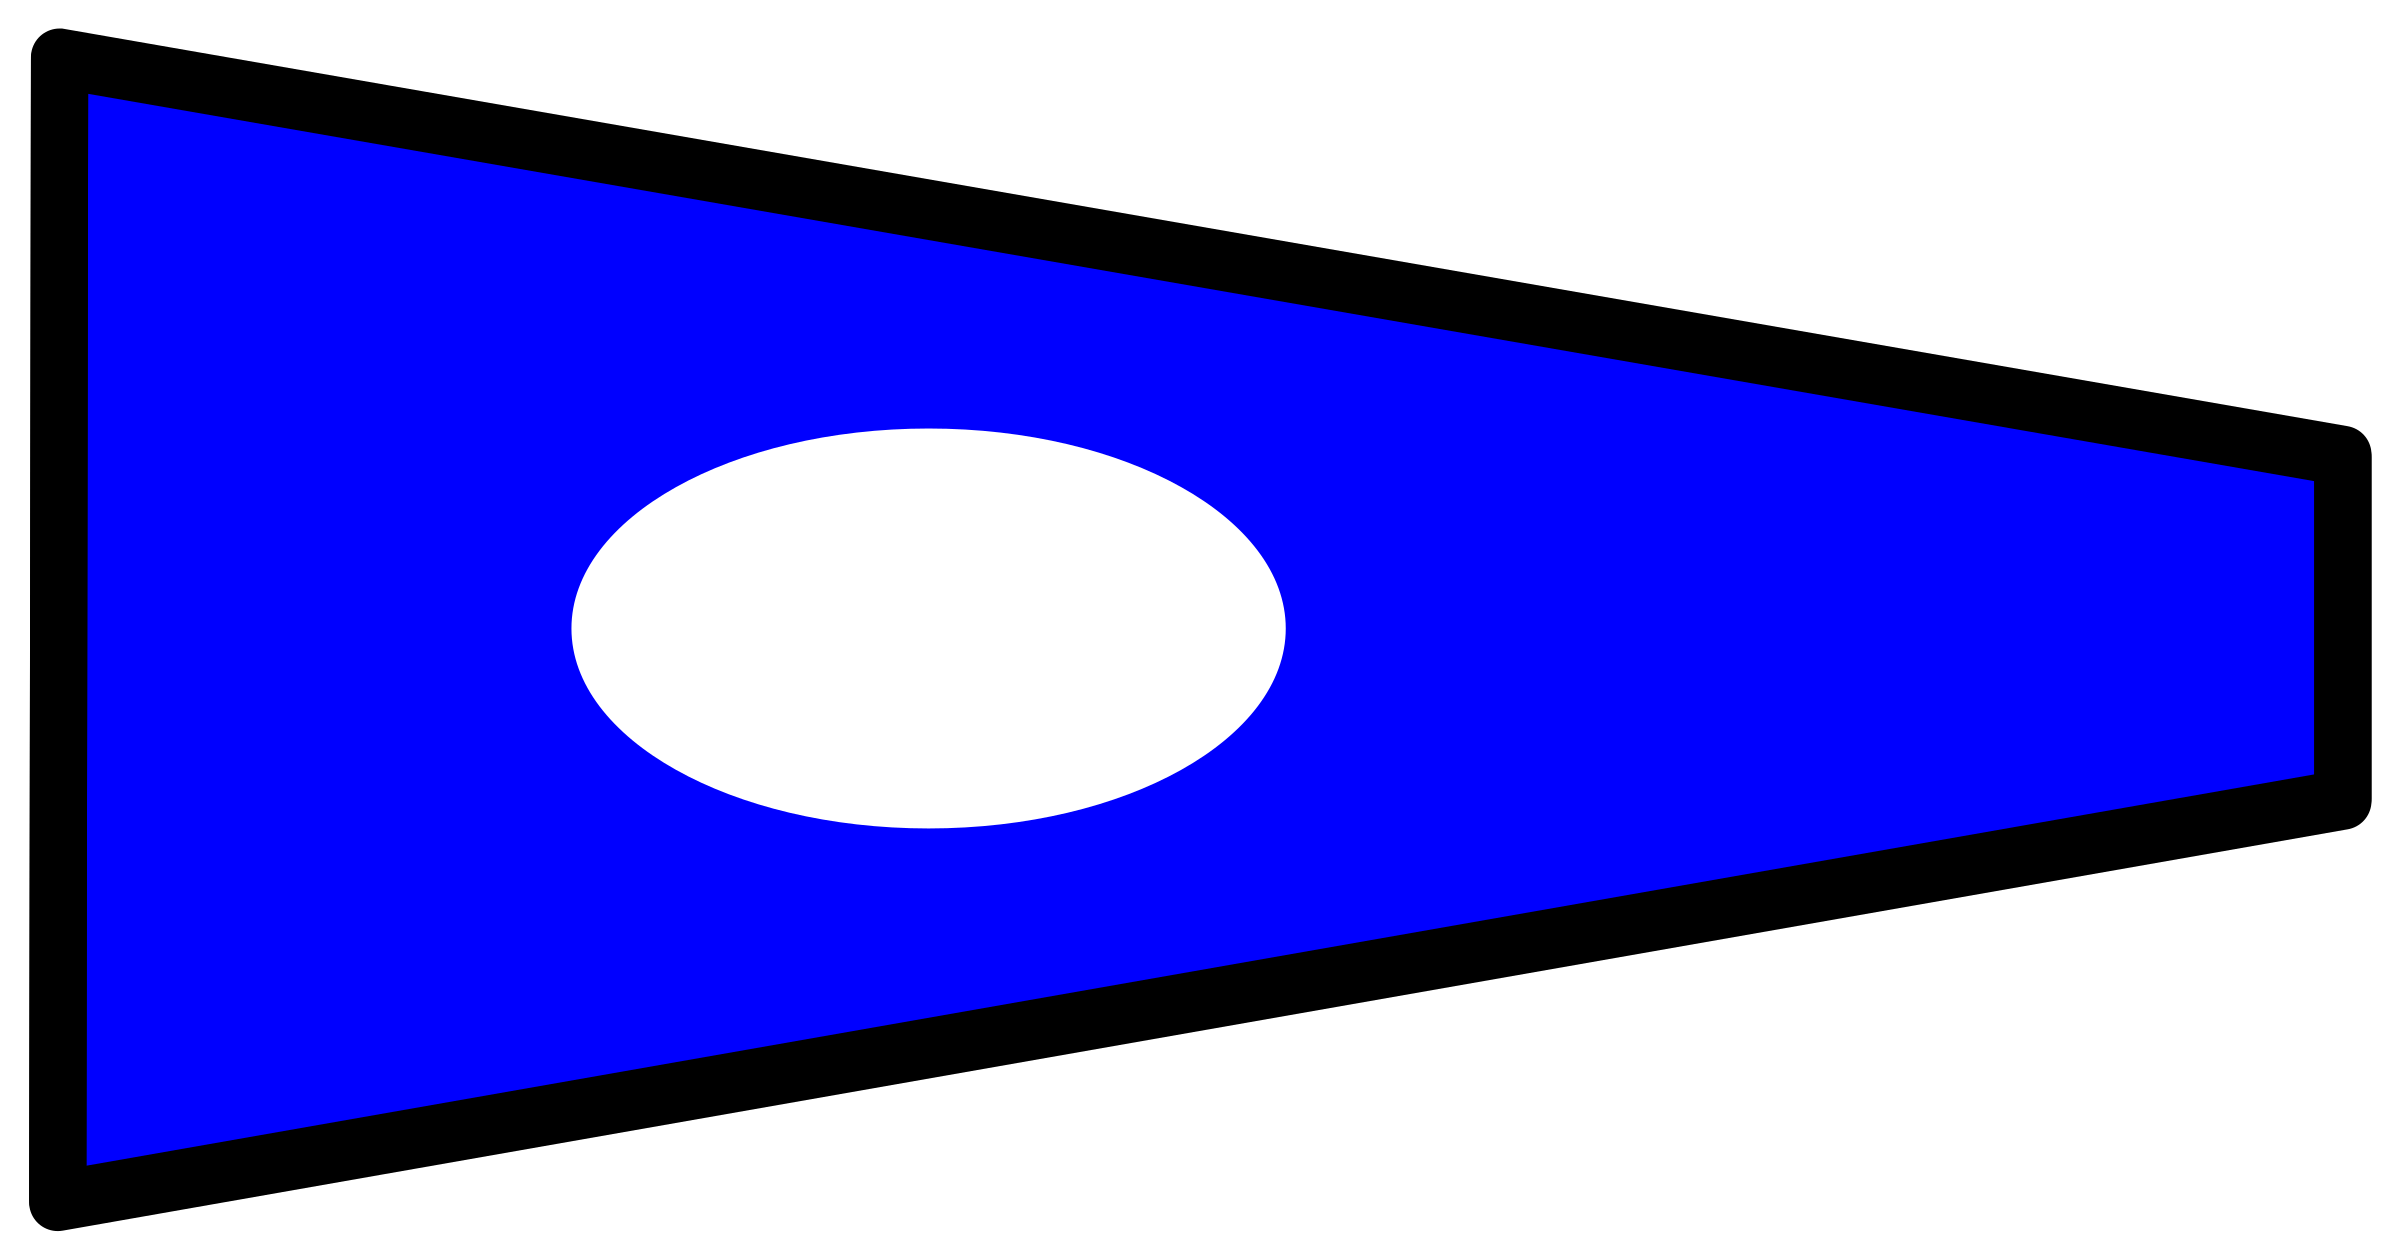 Pennant nautical flag